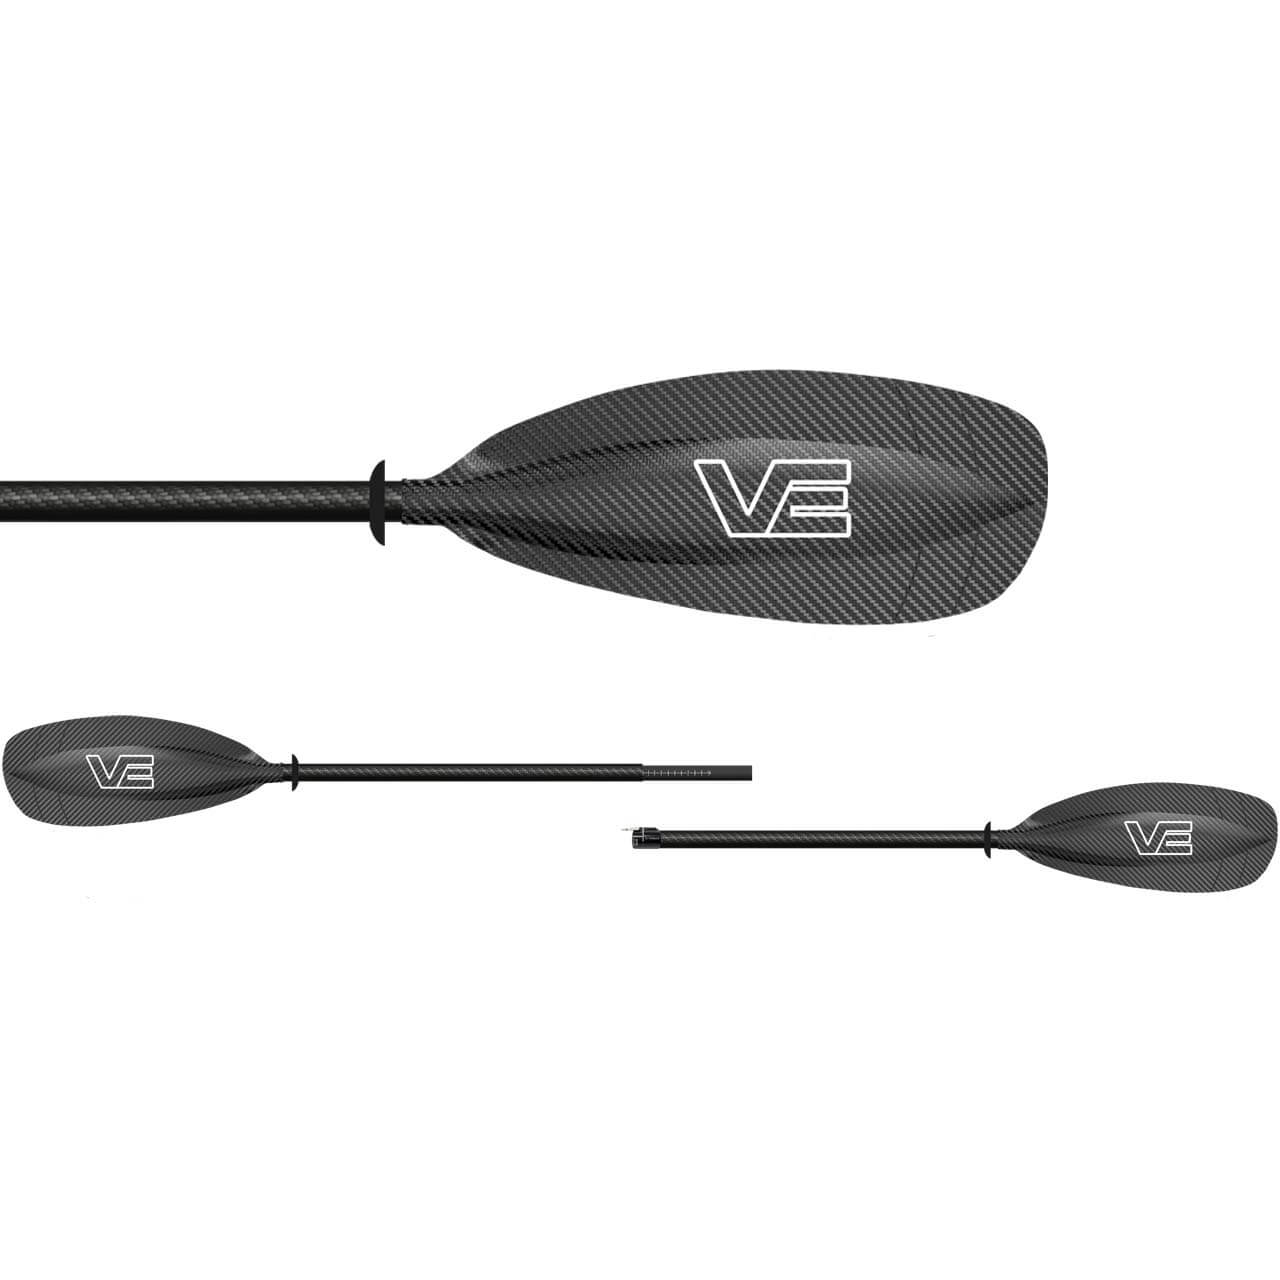 VE Carbonpaddel EXP - 220-230, Straight (2pc) von VE Paddles}